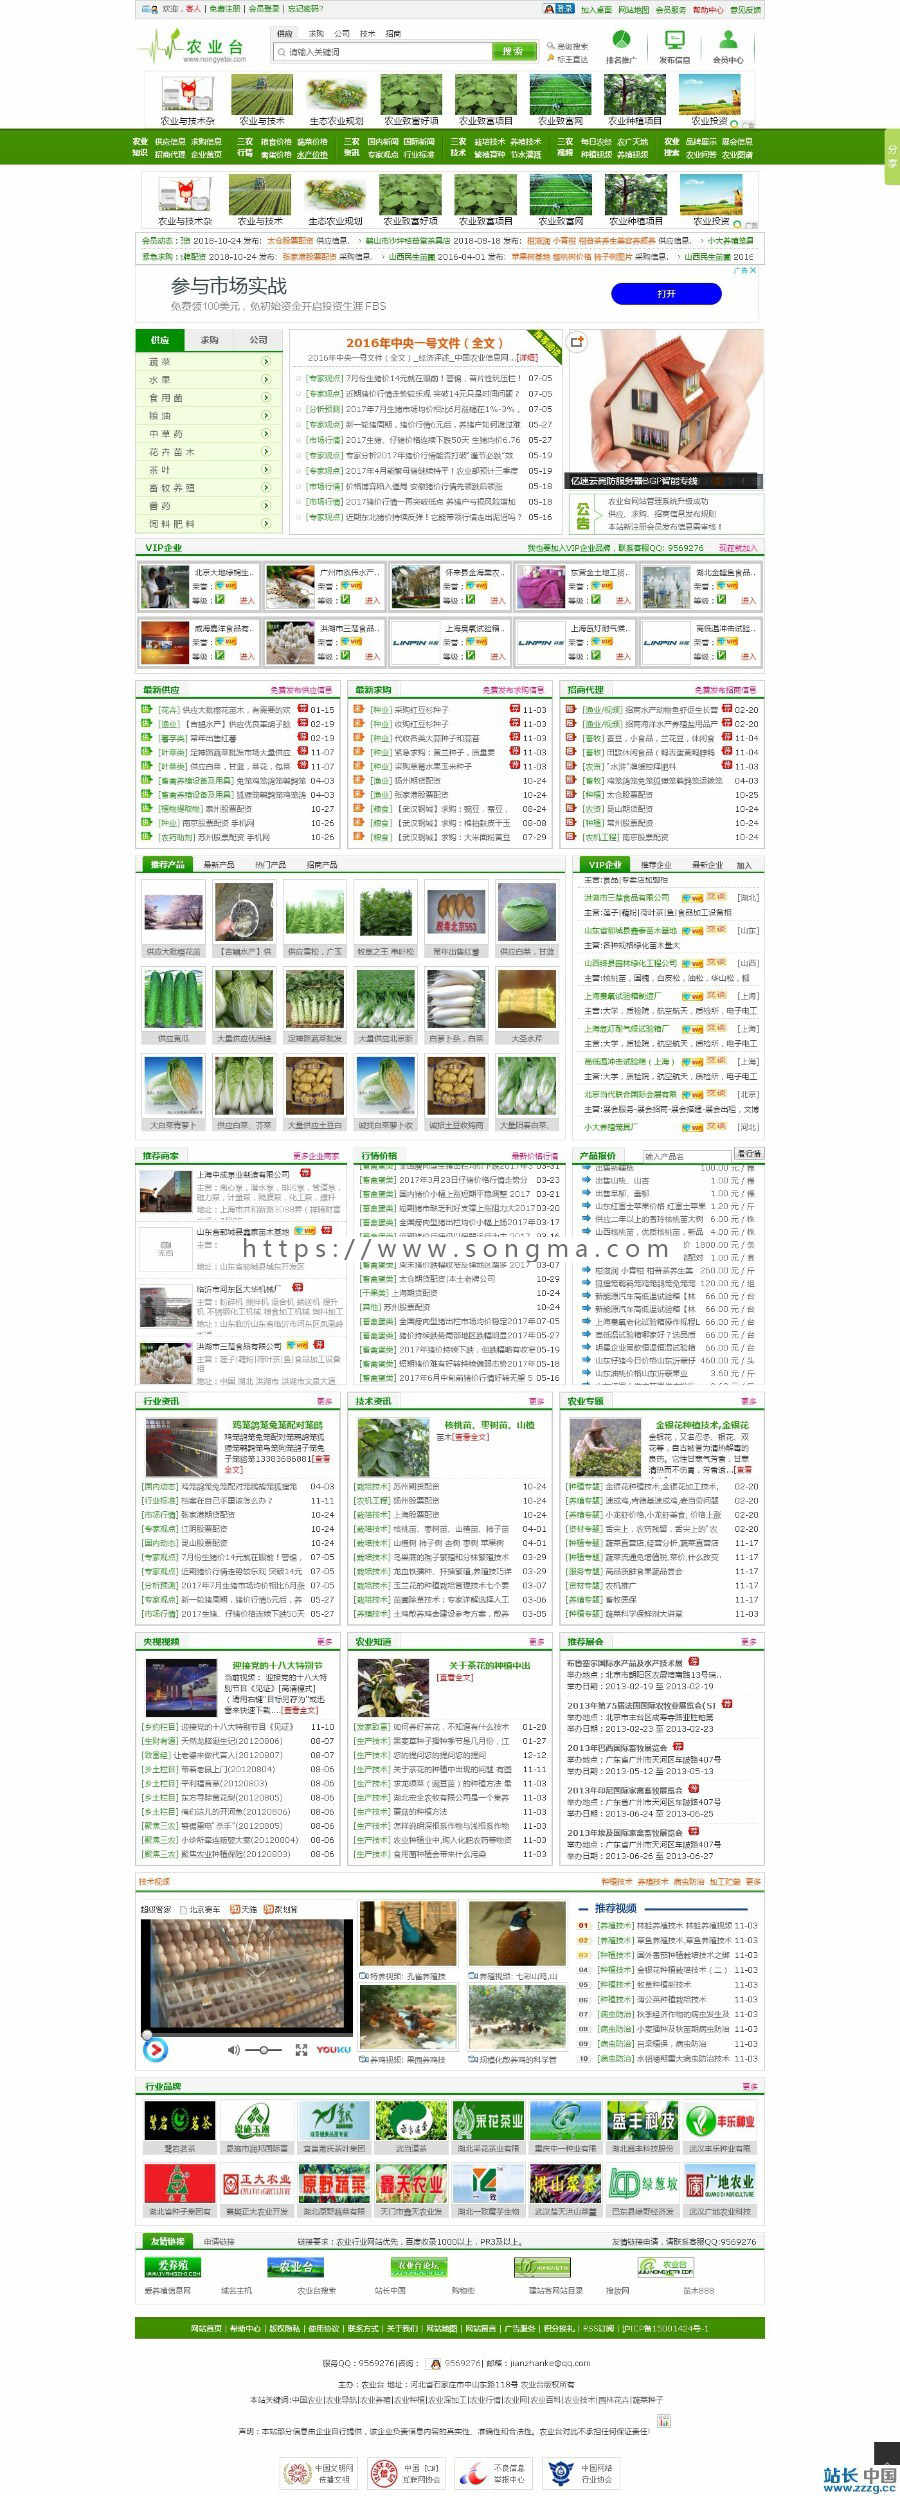 2019 b2b行业门户 绿色农业信息网源码 农业网457M整站数据 destoon